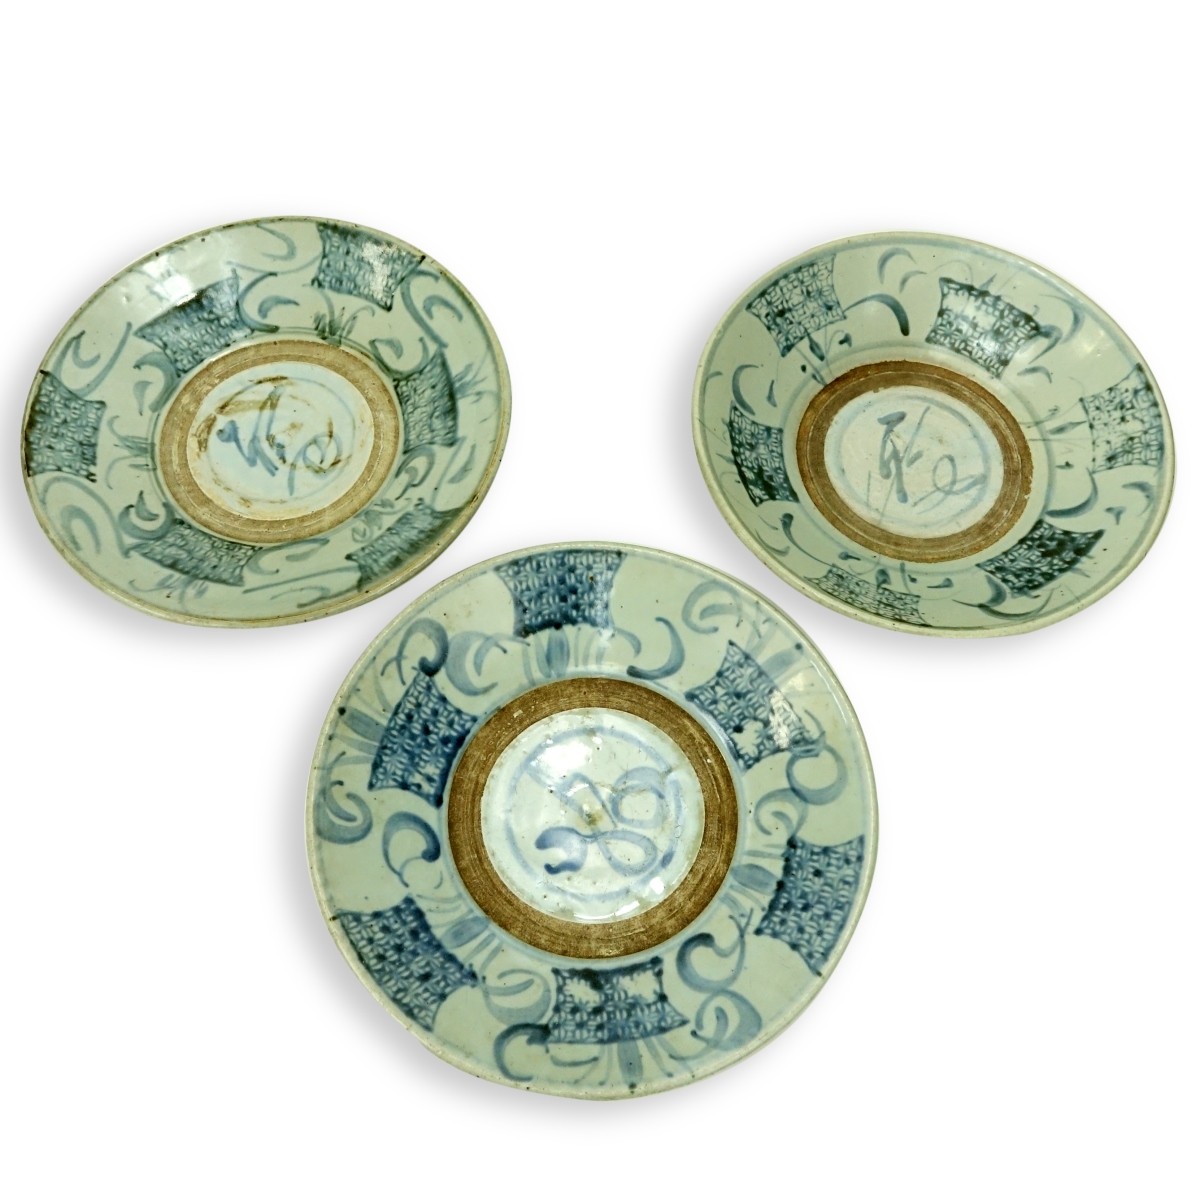 Three (3) Antique Chinese Ceramic Bowls